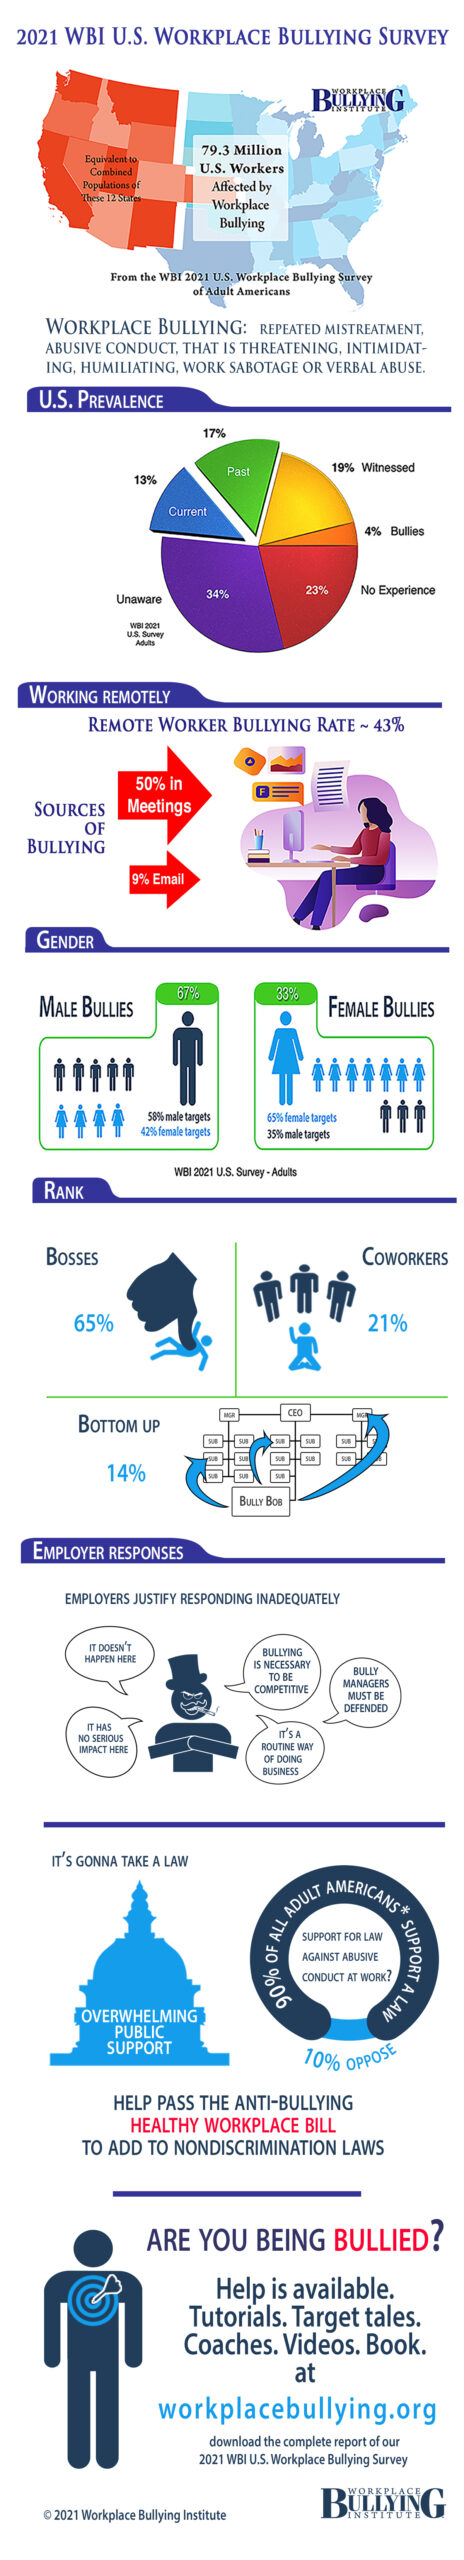 Infographic - 2021 WBI U.S. Workplace Bullying Survey